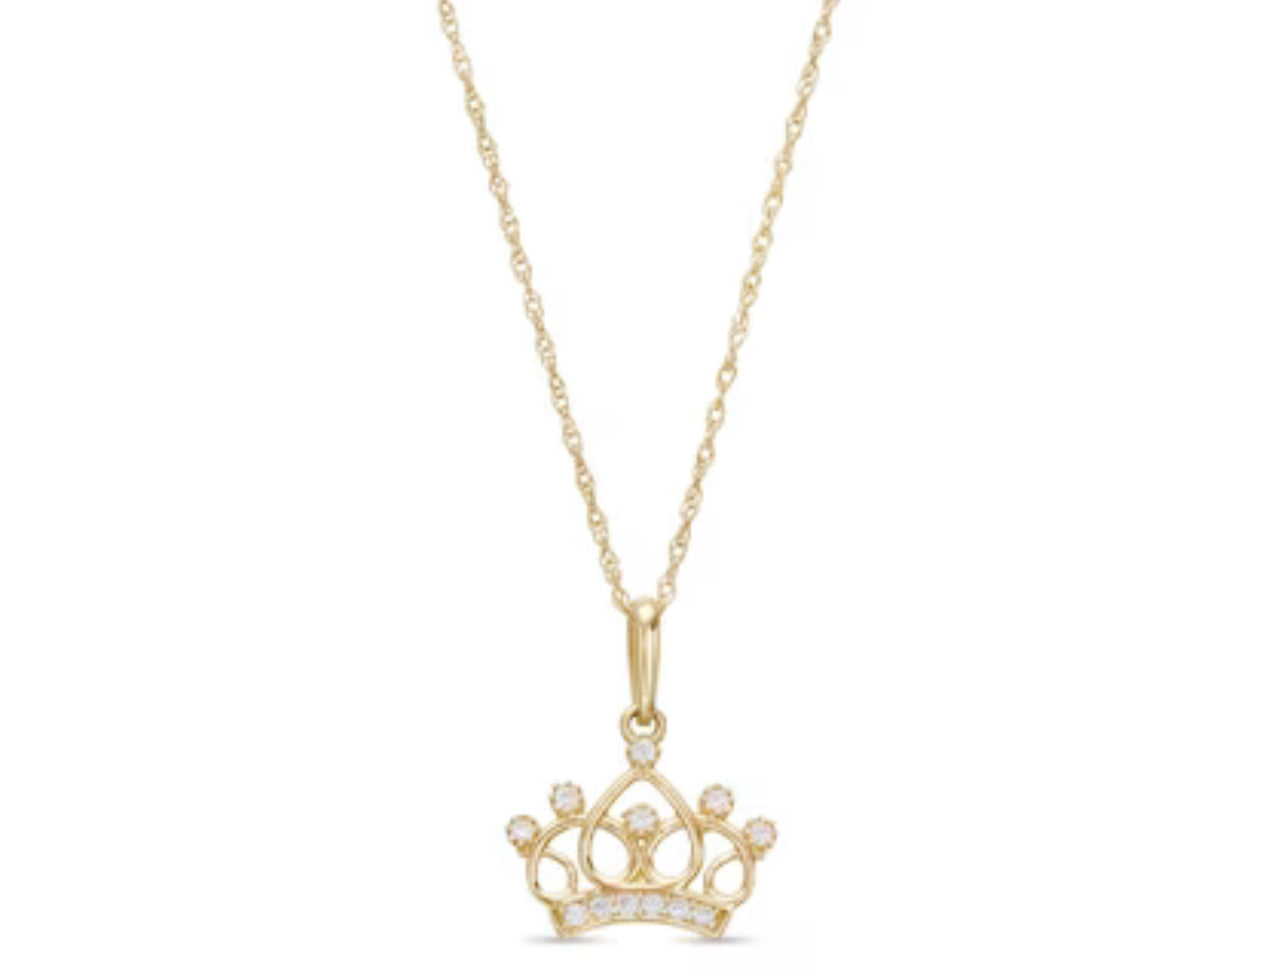 Child's Cubic Zirconia Crown Pendant in 14K Gold – 15"